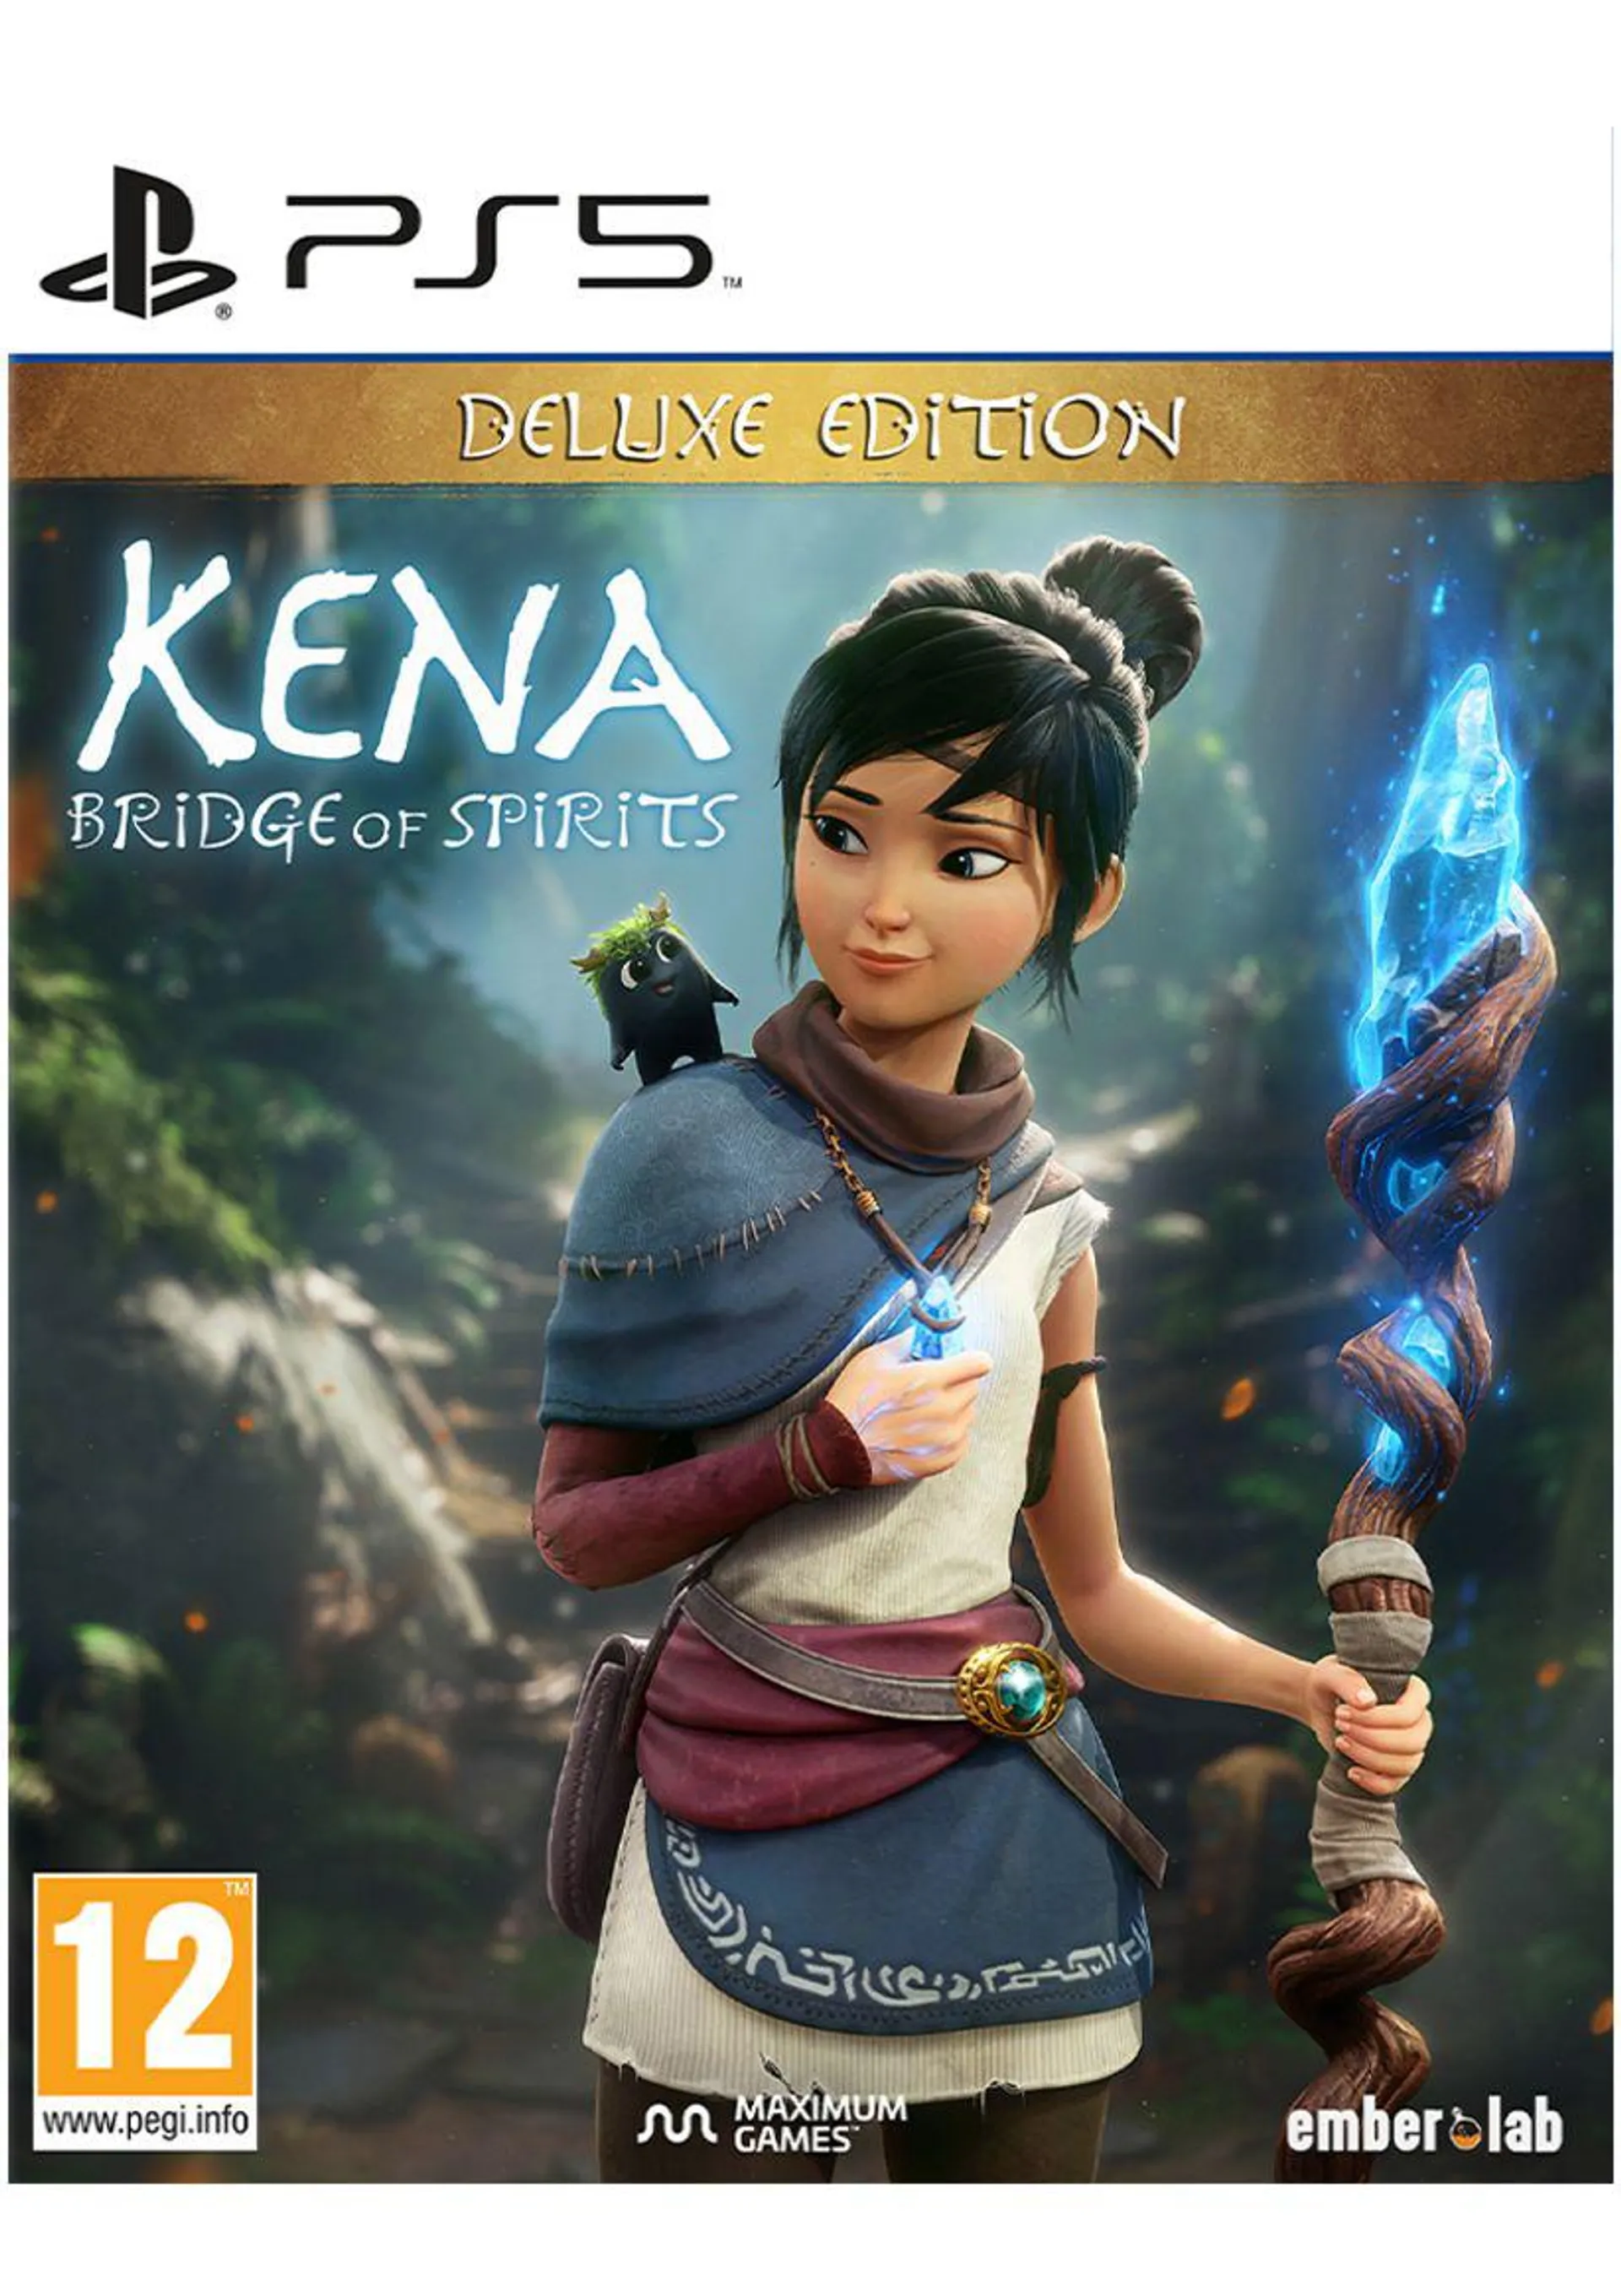 Kena: Bridge of Spirits Deluxe Edition on PlayStation 5